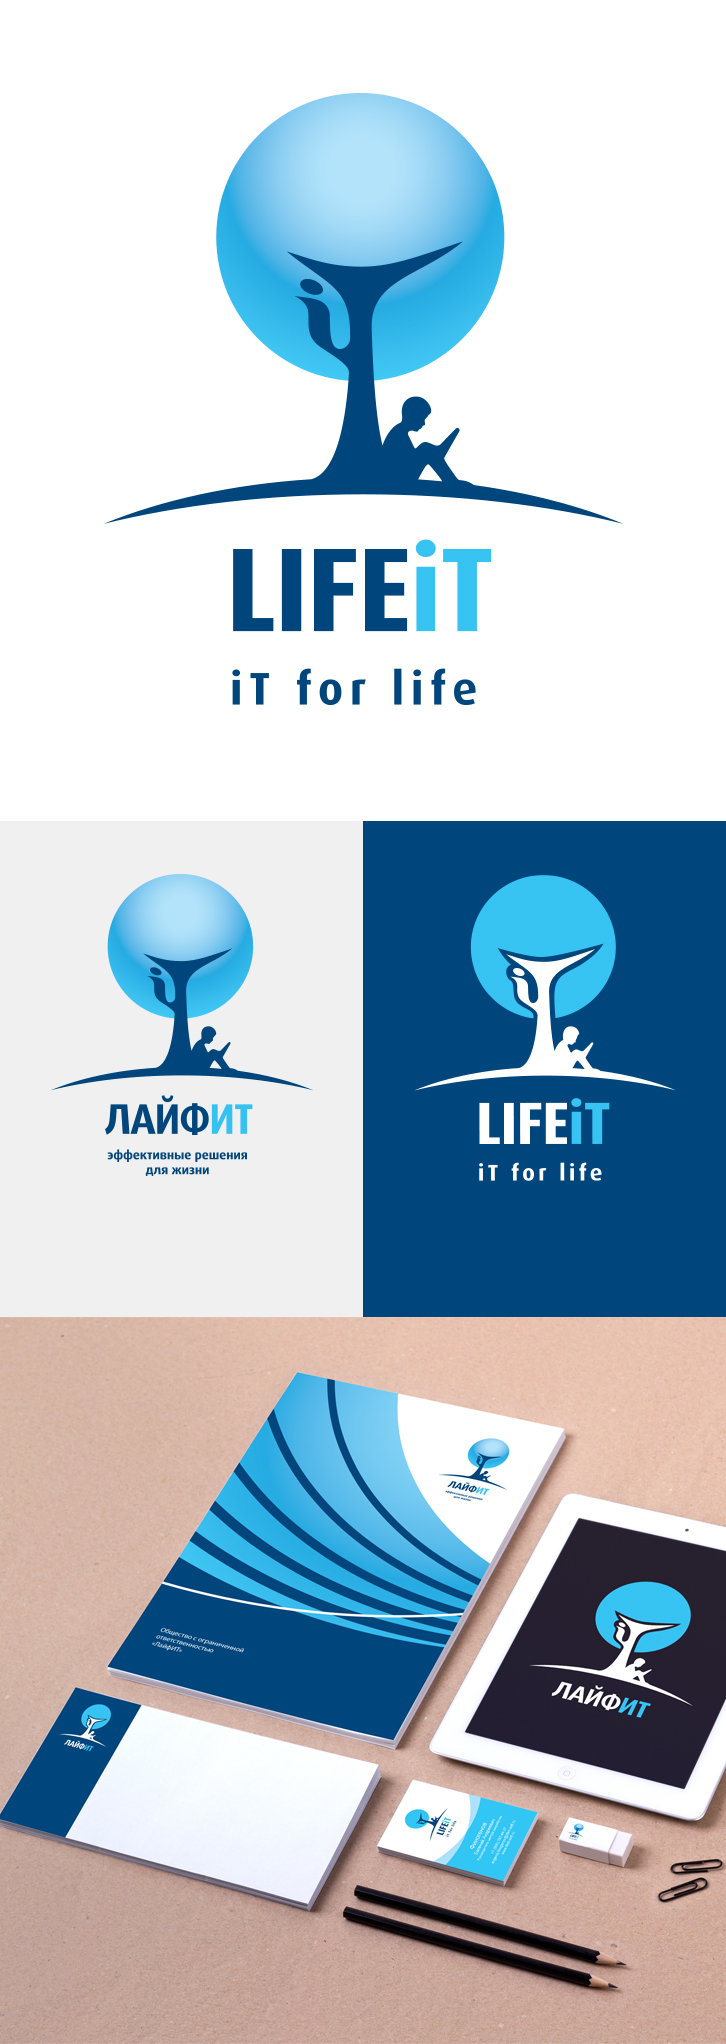 Эскиз проекта LIFEiT — iT for life